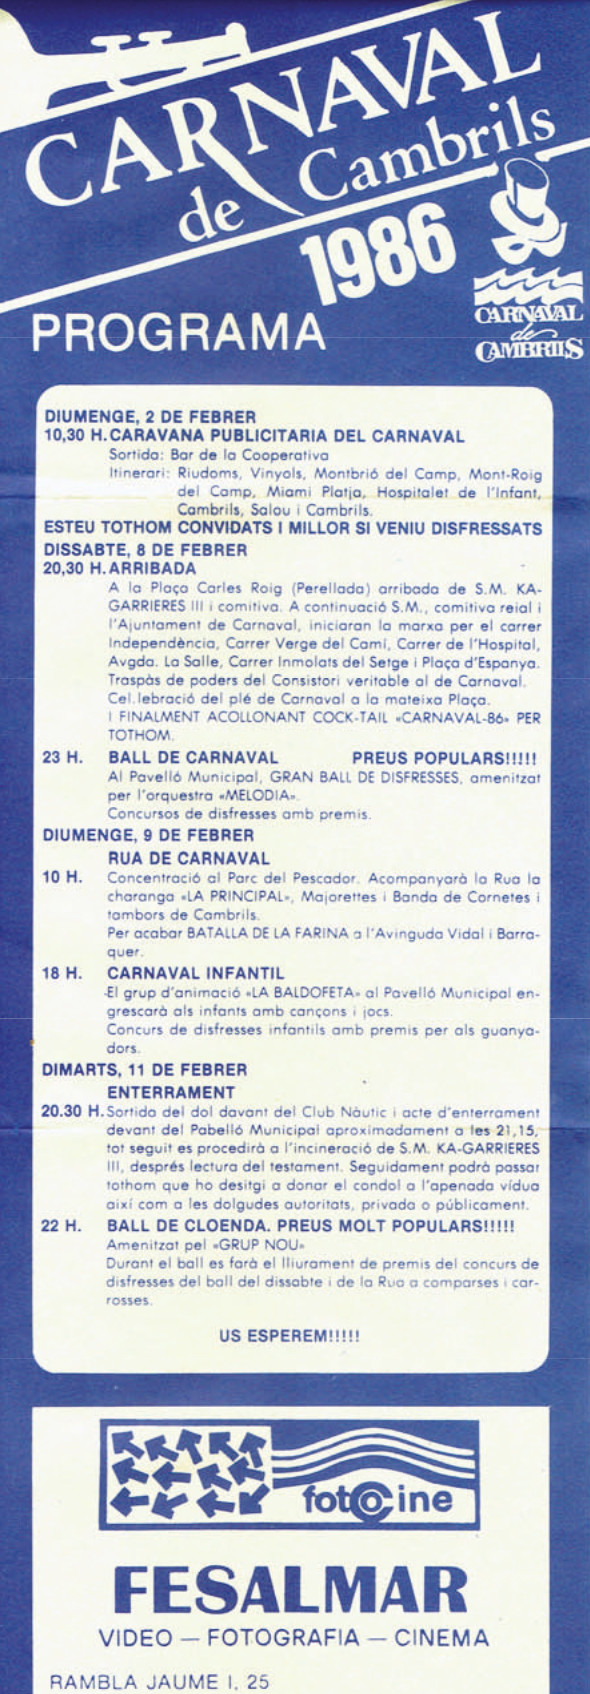 programa carnaval cambrils 1986